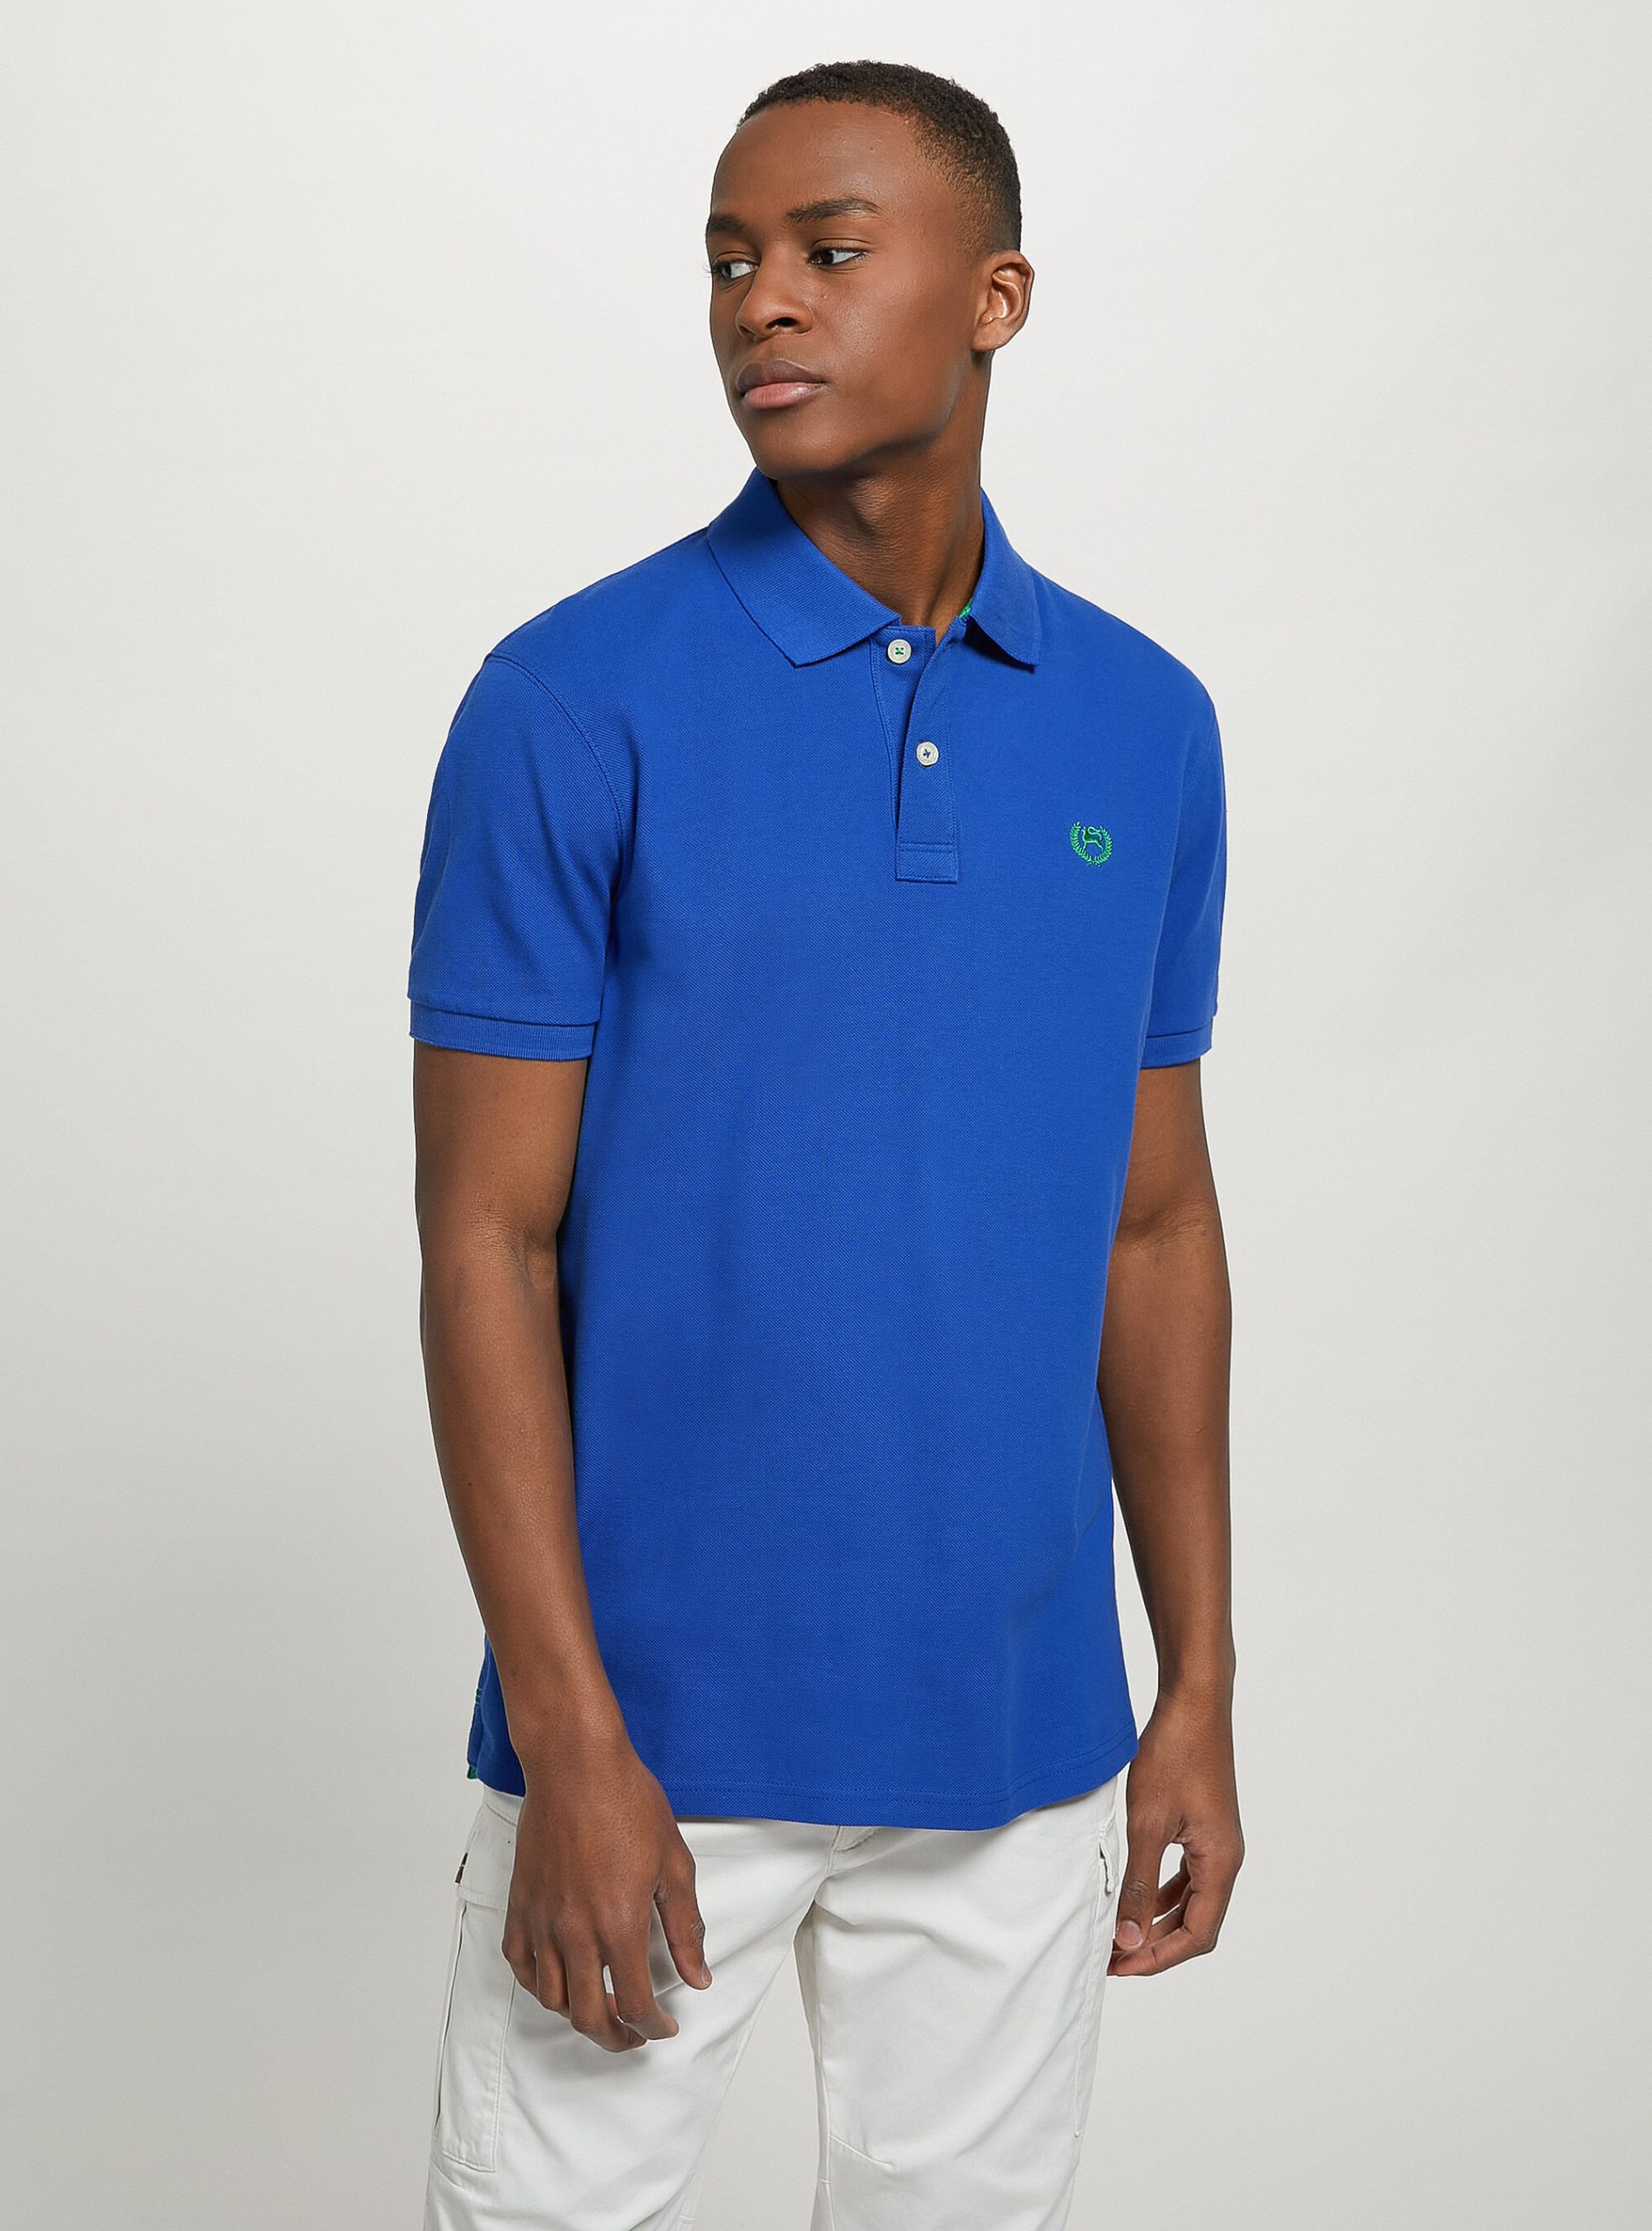 Polo Cotton Piqué Polo Shirt With Embroidery Männer Ry1 Royale Dark Alcott Online – 2